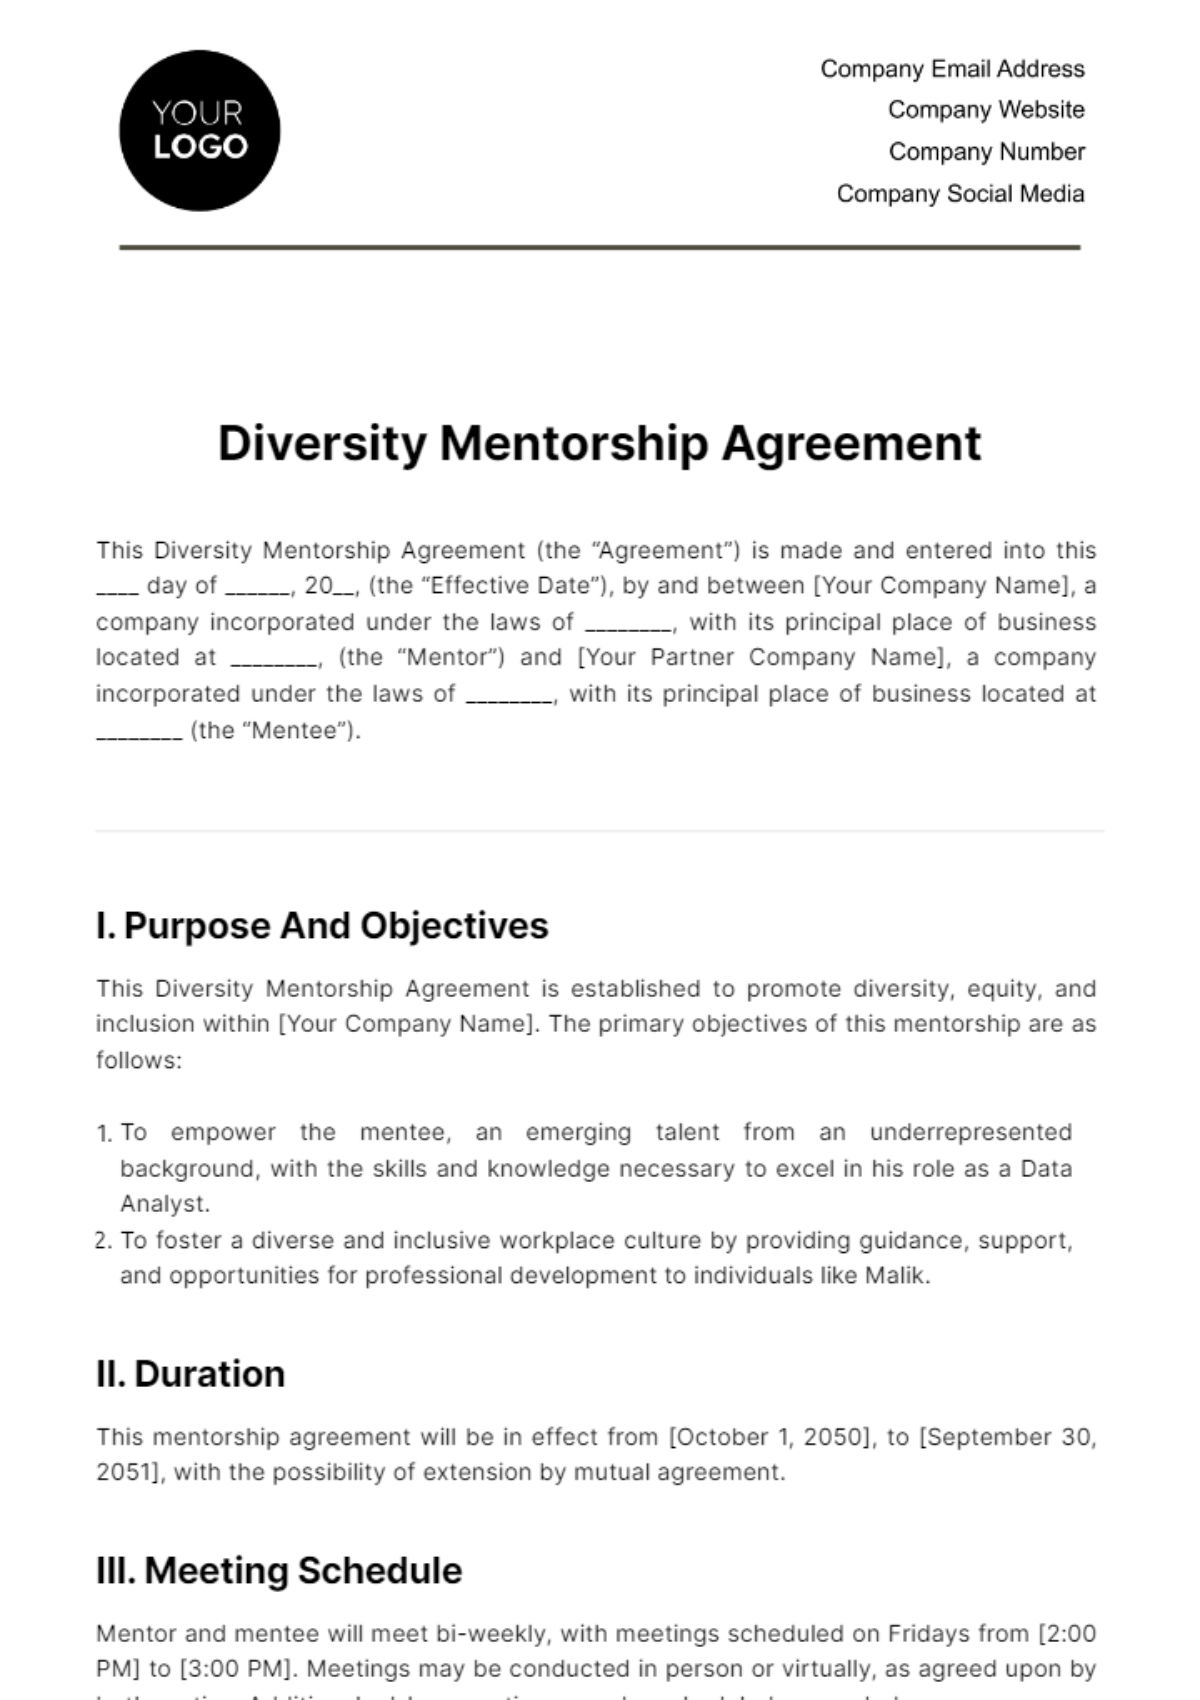 Free Diversity Mentorship Agreement HR Template